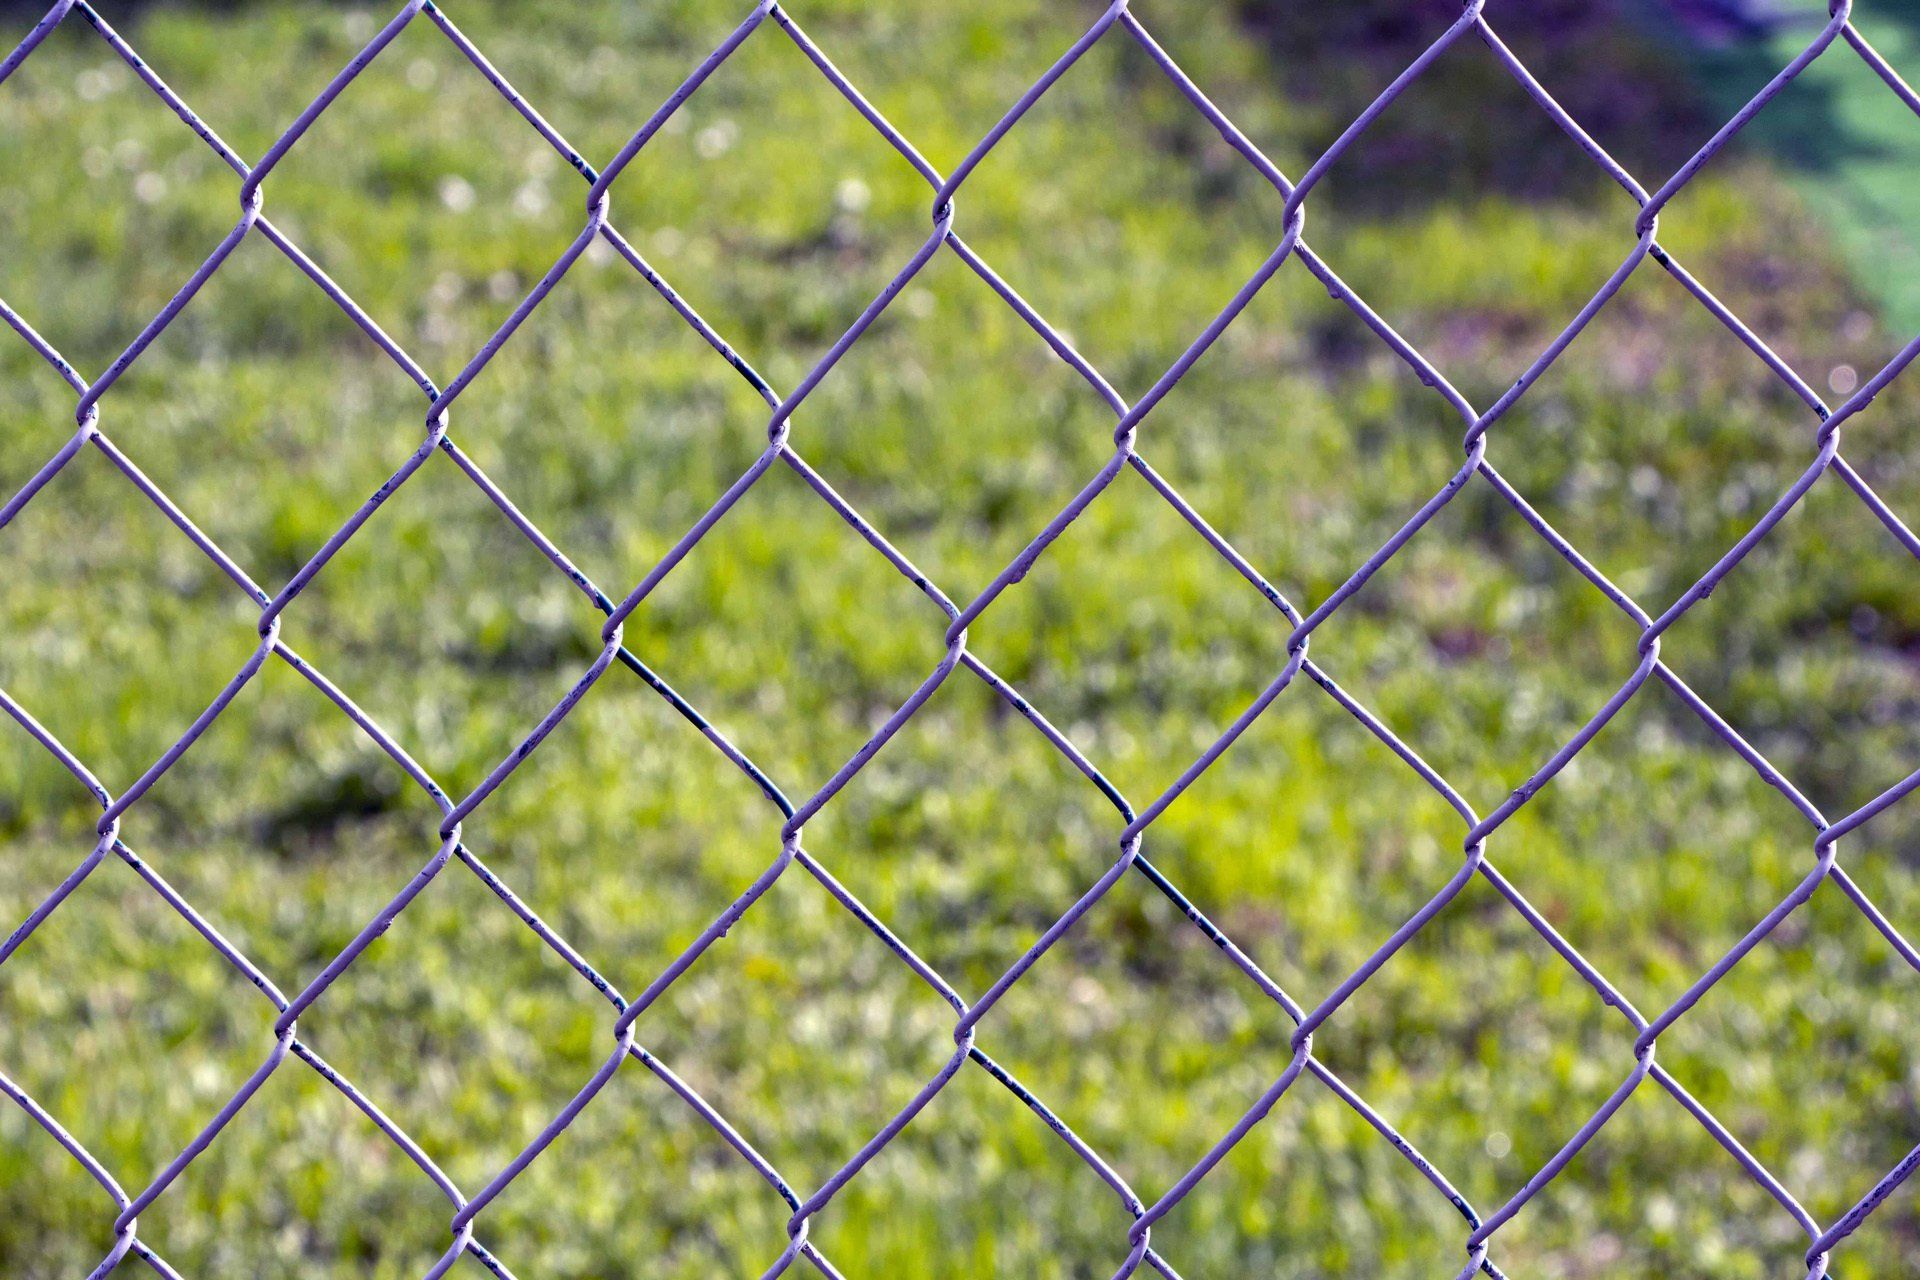 Vinyl chain link fence fabric